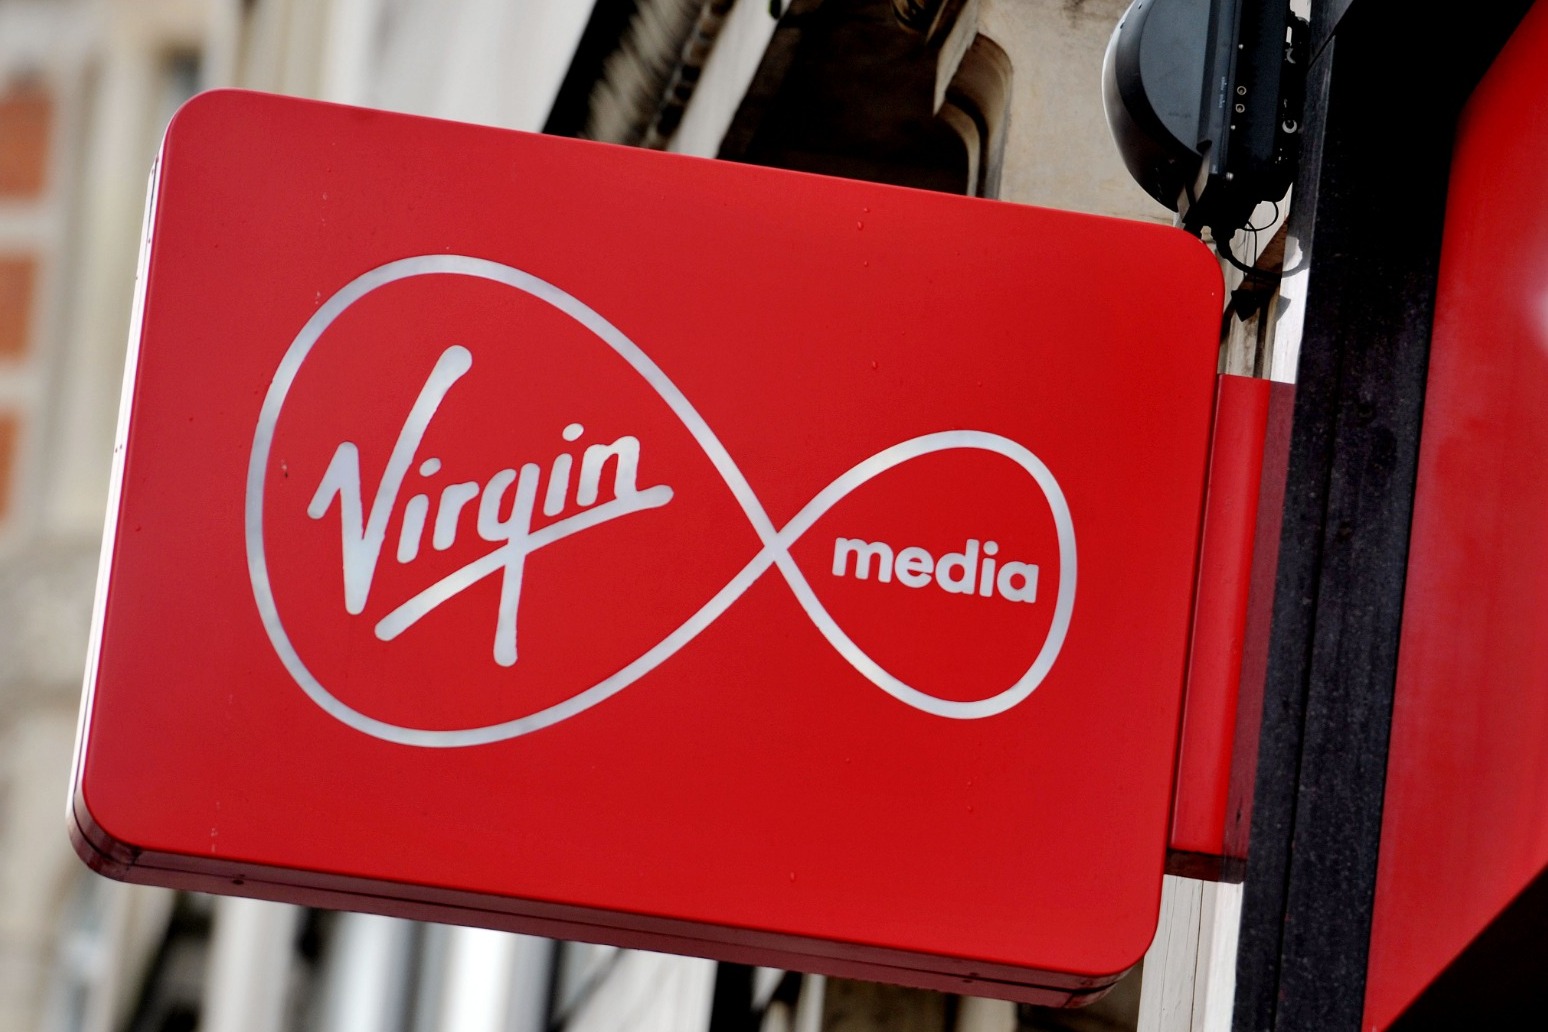 Virgin Media cuts price of social tariff broadband package 